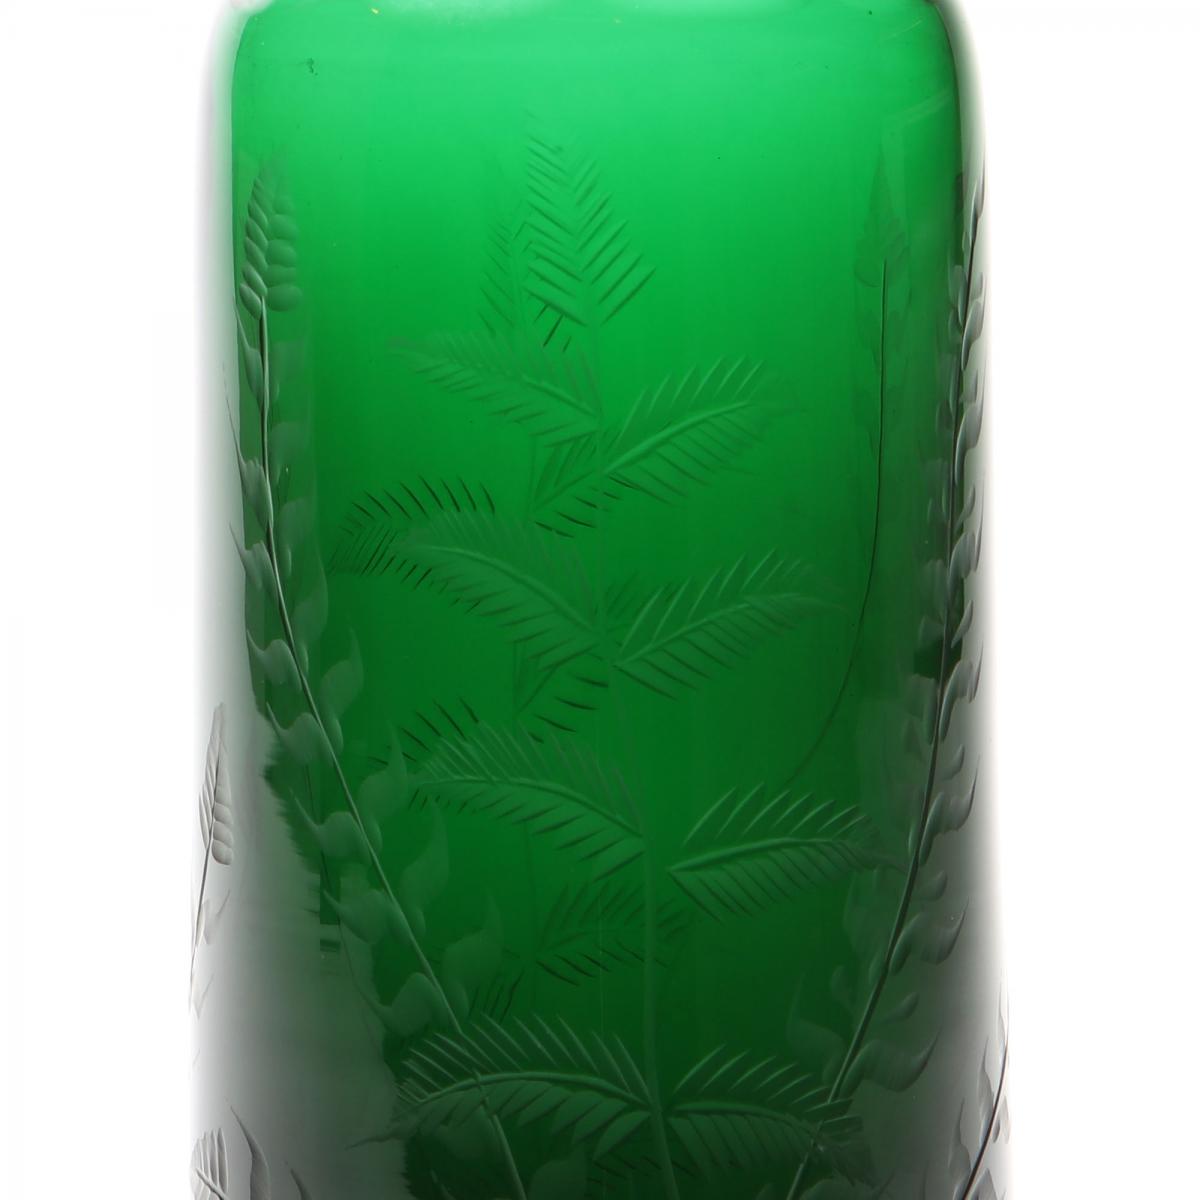 A Victorian green glass decanter